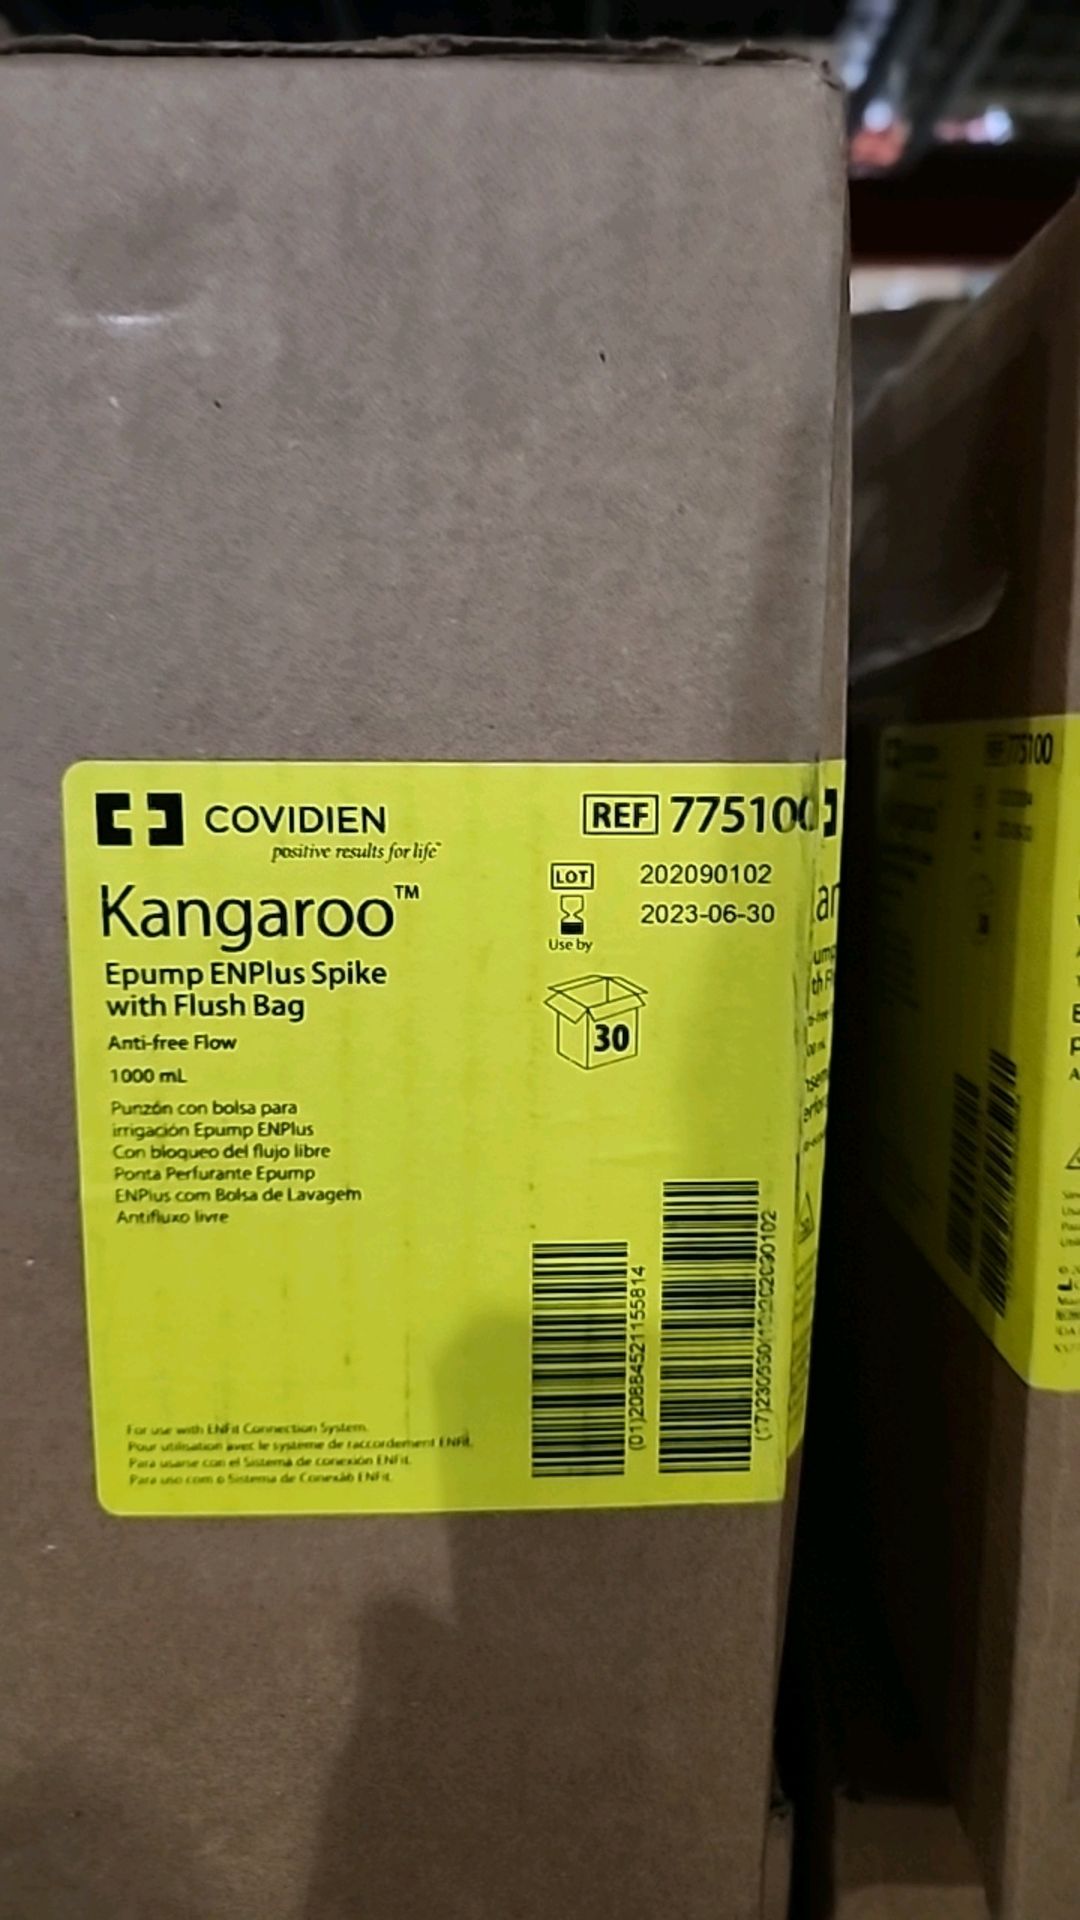 COVIDIEN REF 775100 KANGAROO EPUMP ENPLUS SPIKE W/ FLUSH BAG (NOT IN DATE) LOCATION: 100 GOLDEN - Image 3 of 3